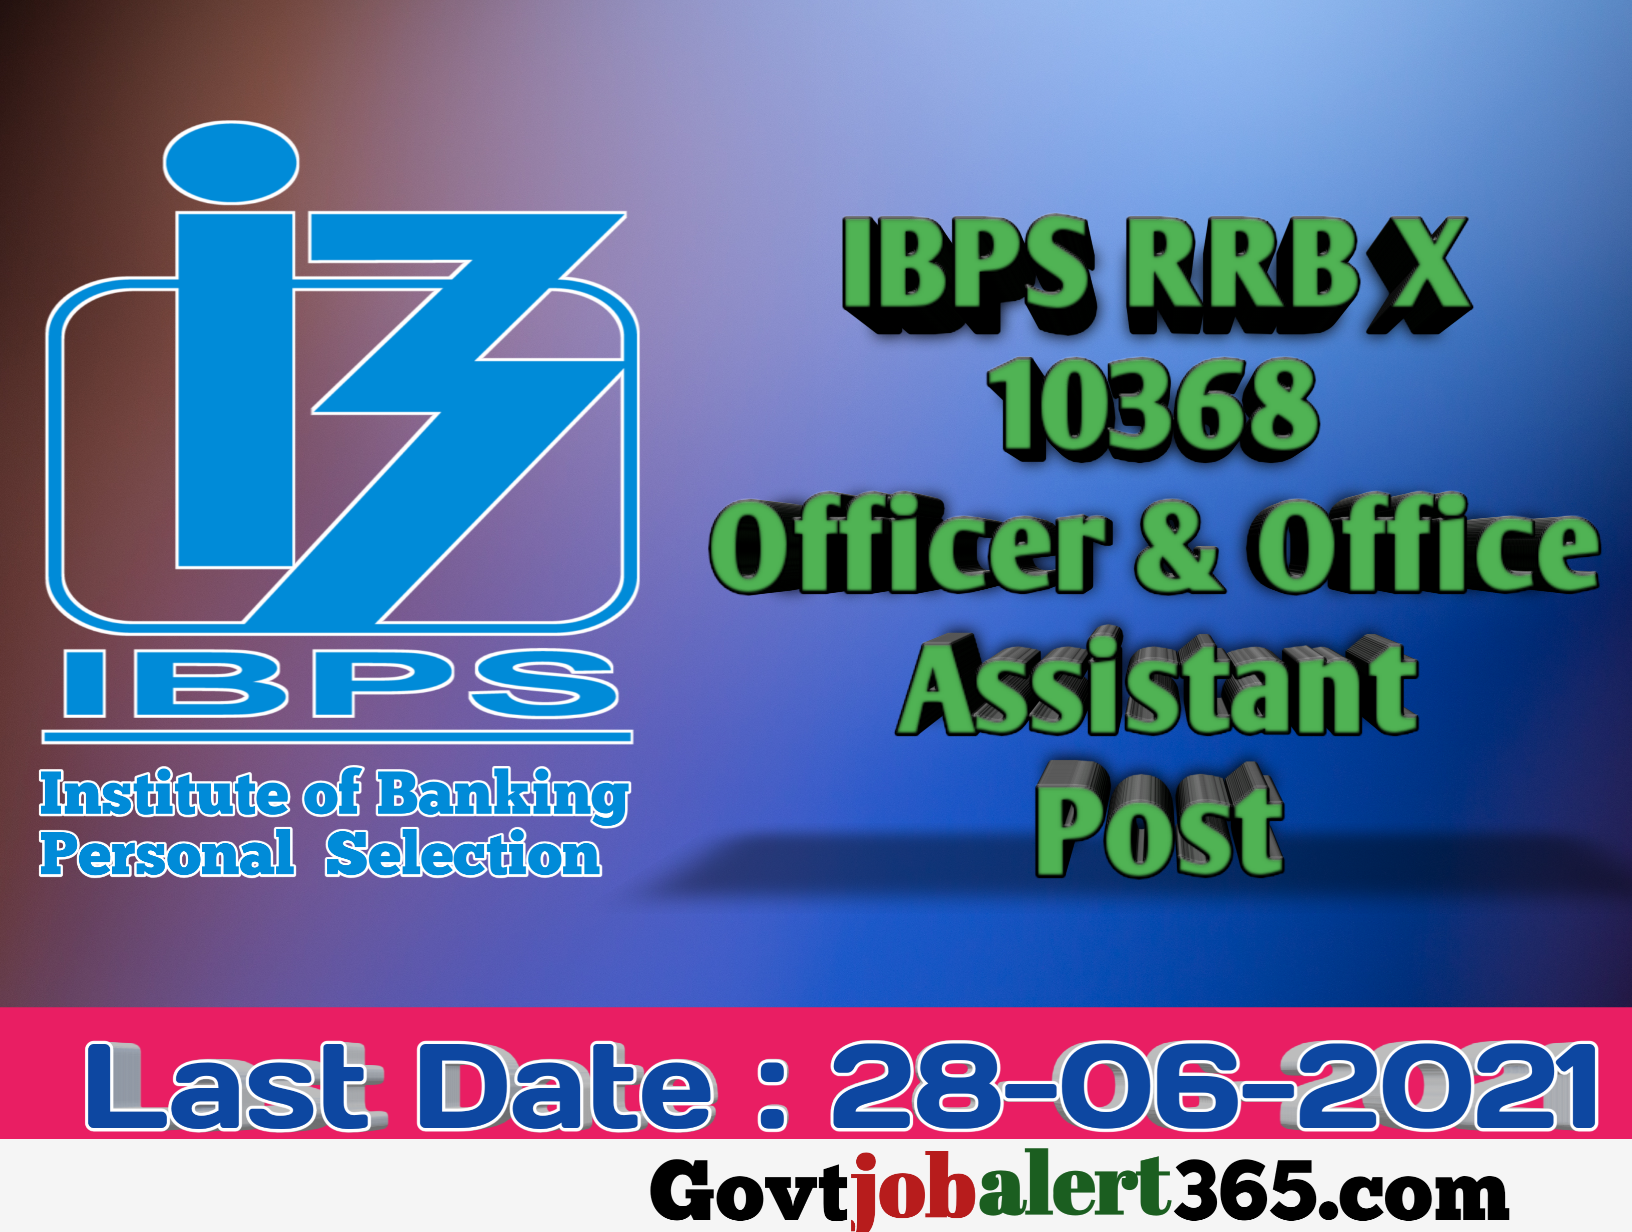 IBPS Bank Recruitment 2021